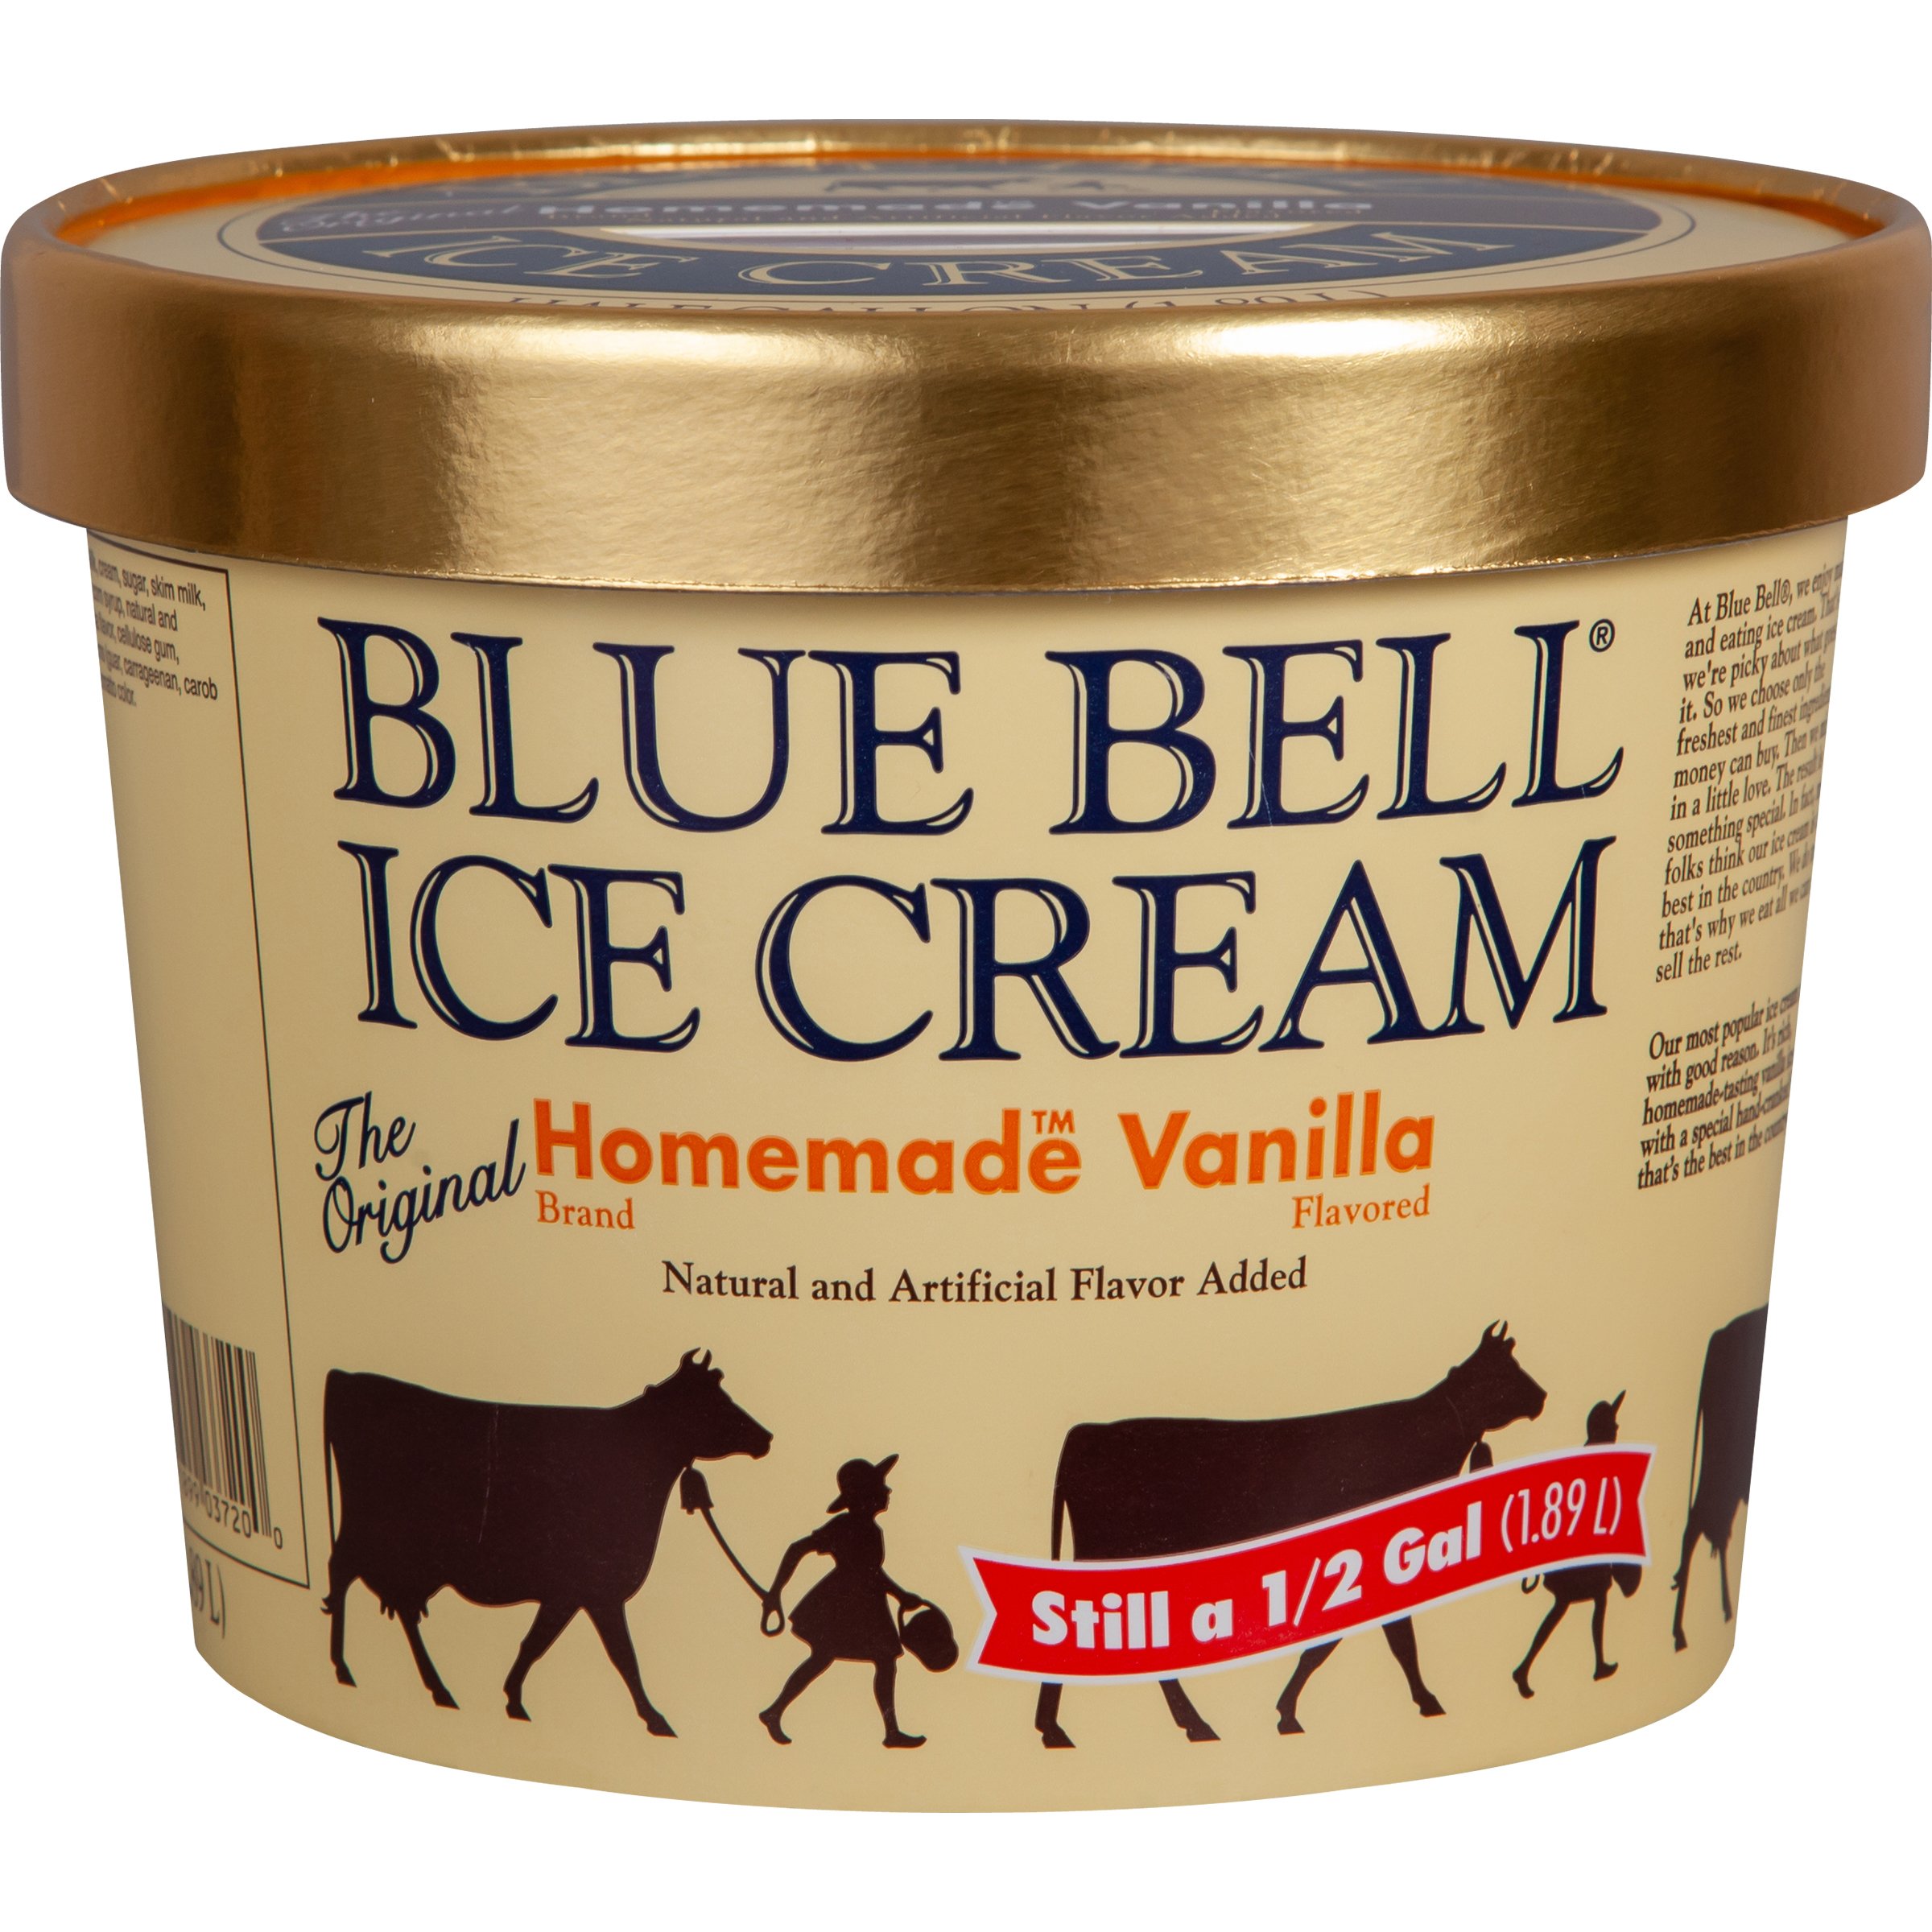 Blue Bell Homemade Vanilla Ice Cream 0.5 gal tub, Ice Cream